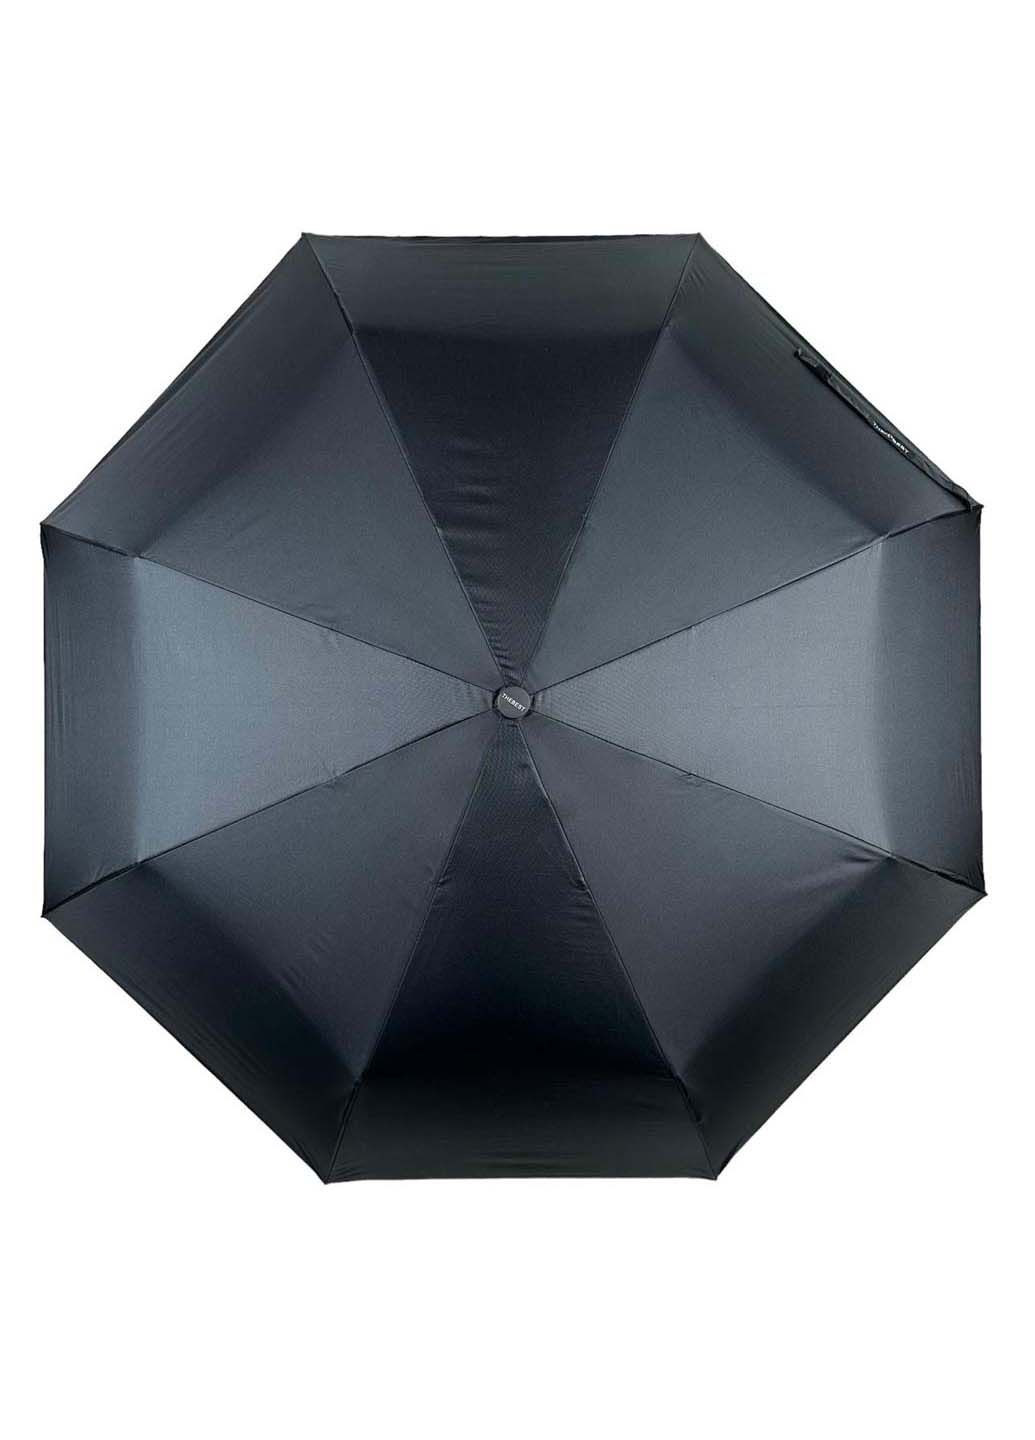 Мужской складной зонт полуавтомат на 8 спиц The Best (289977307)